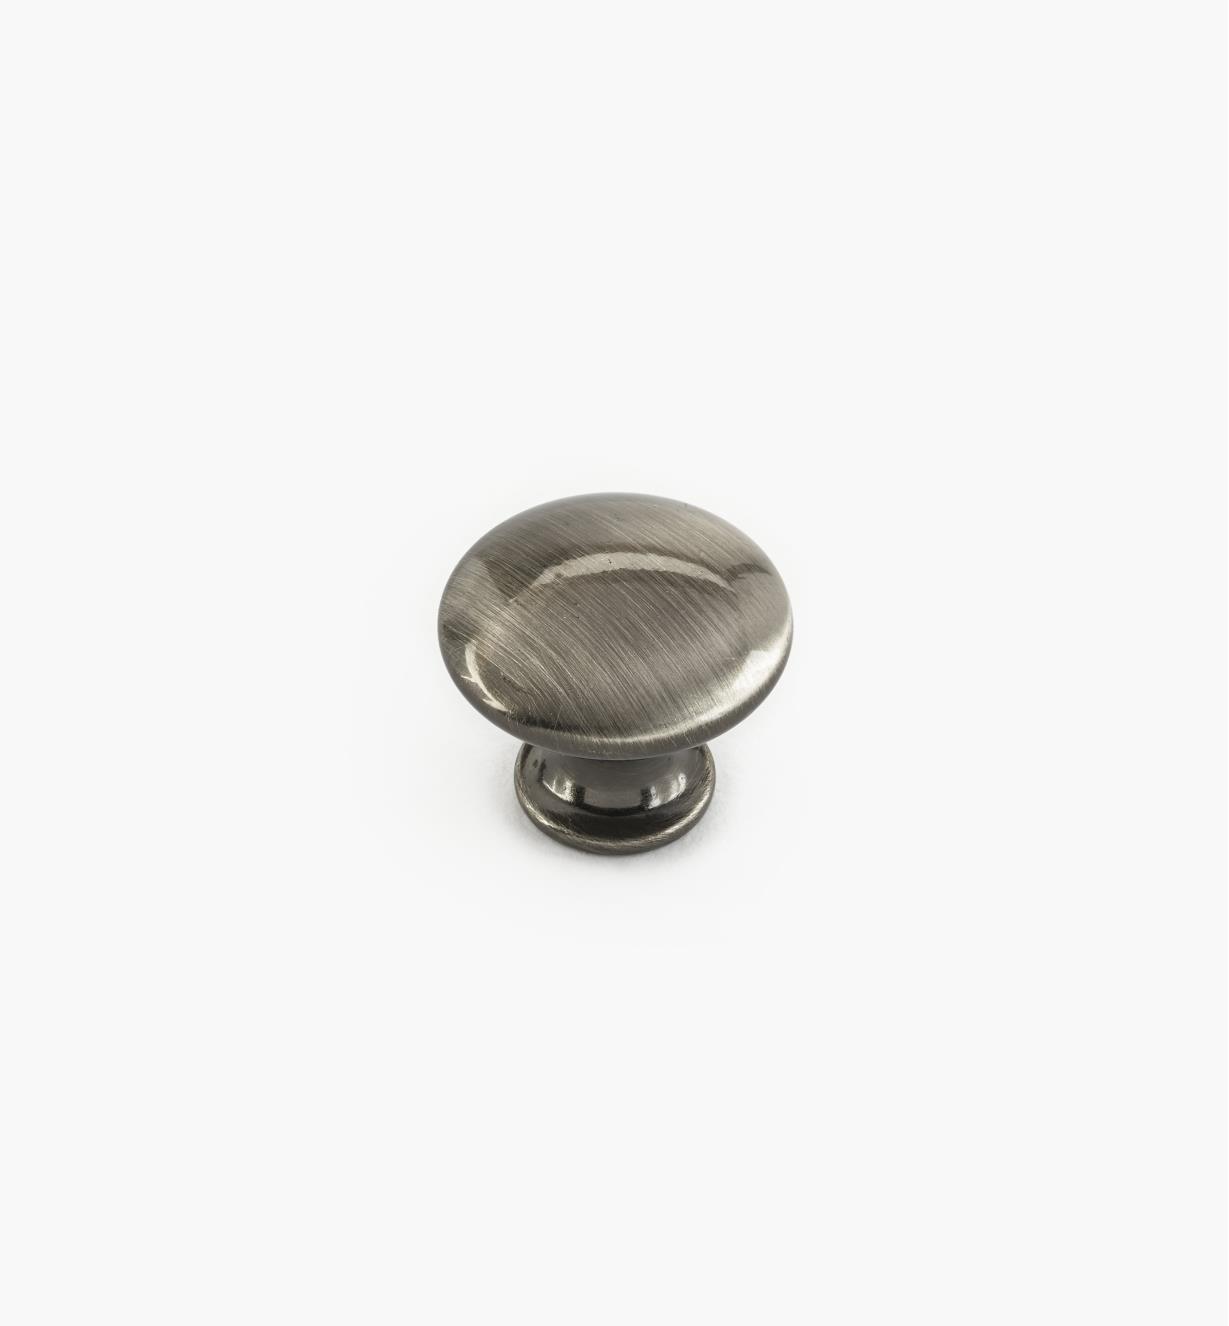 02W4363 - 3/4" x 5/8" Brushed Black Nickel Knob